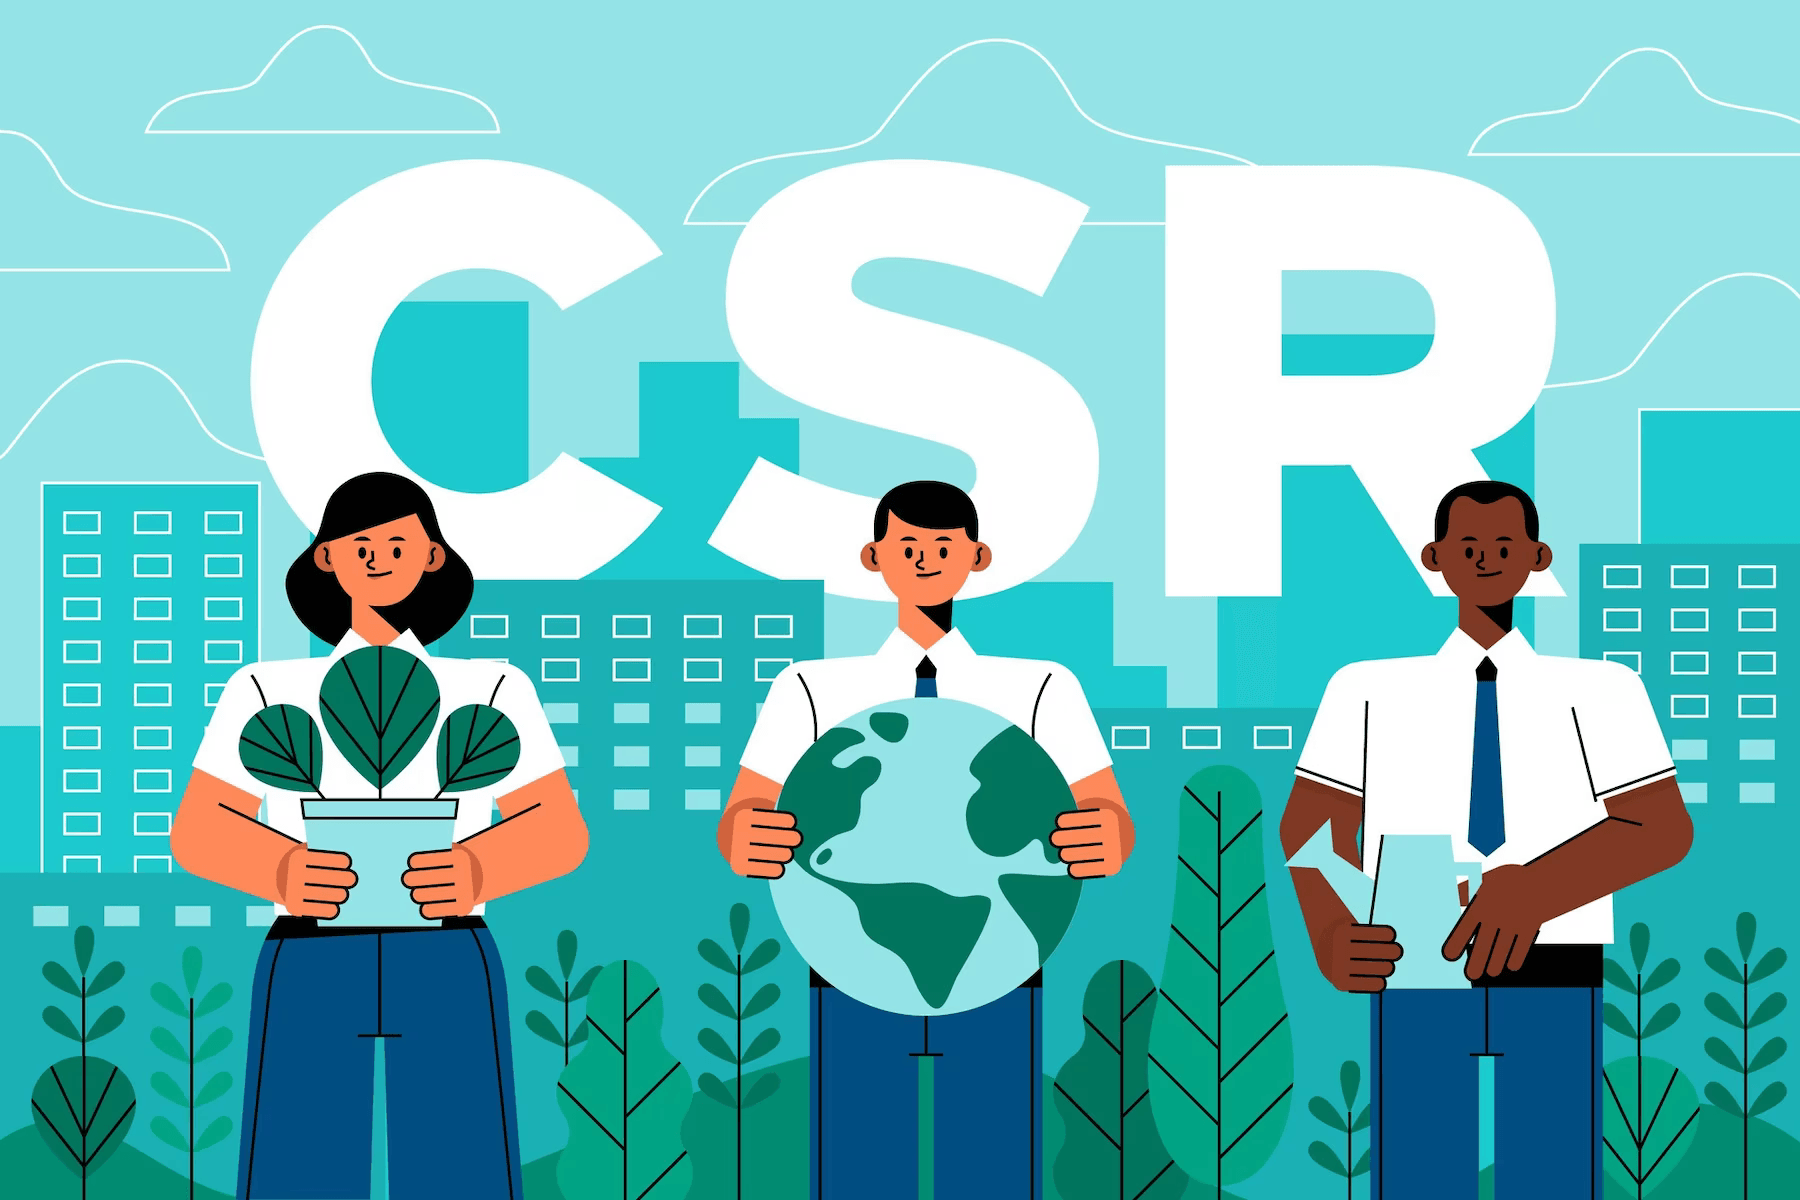 Corporate Social Responsibility (CSR)